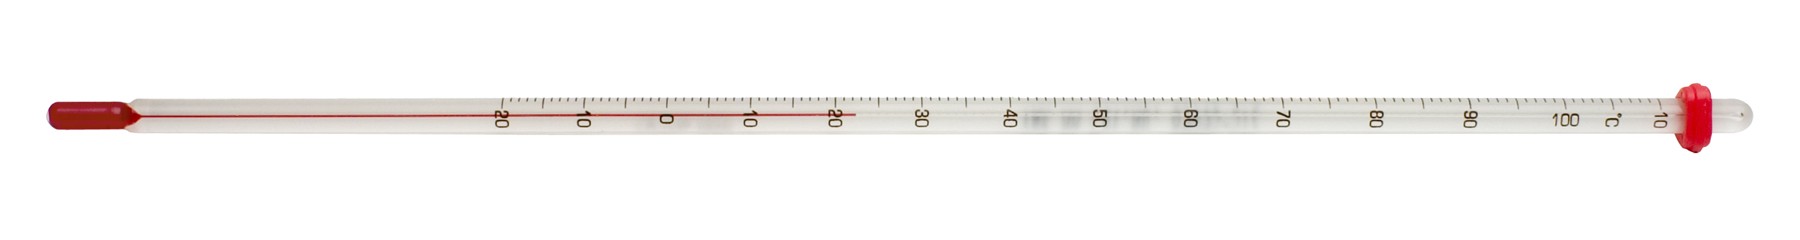 SP Bel-Art, H-B DURAC General Purpose Liquid-In-Glass Laboratory Thermometer; -40 to 120F, Total Immersion, Organic Liquid Fill